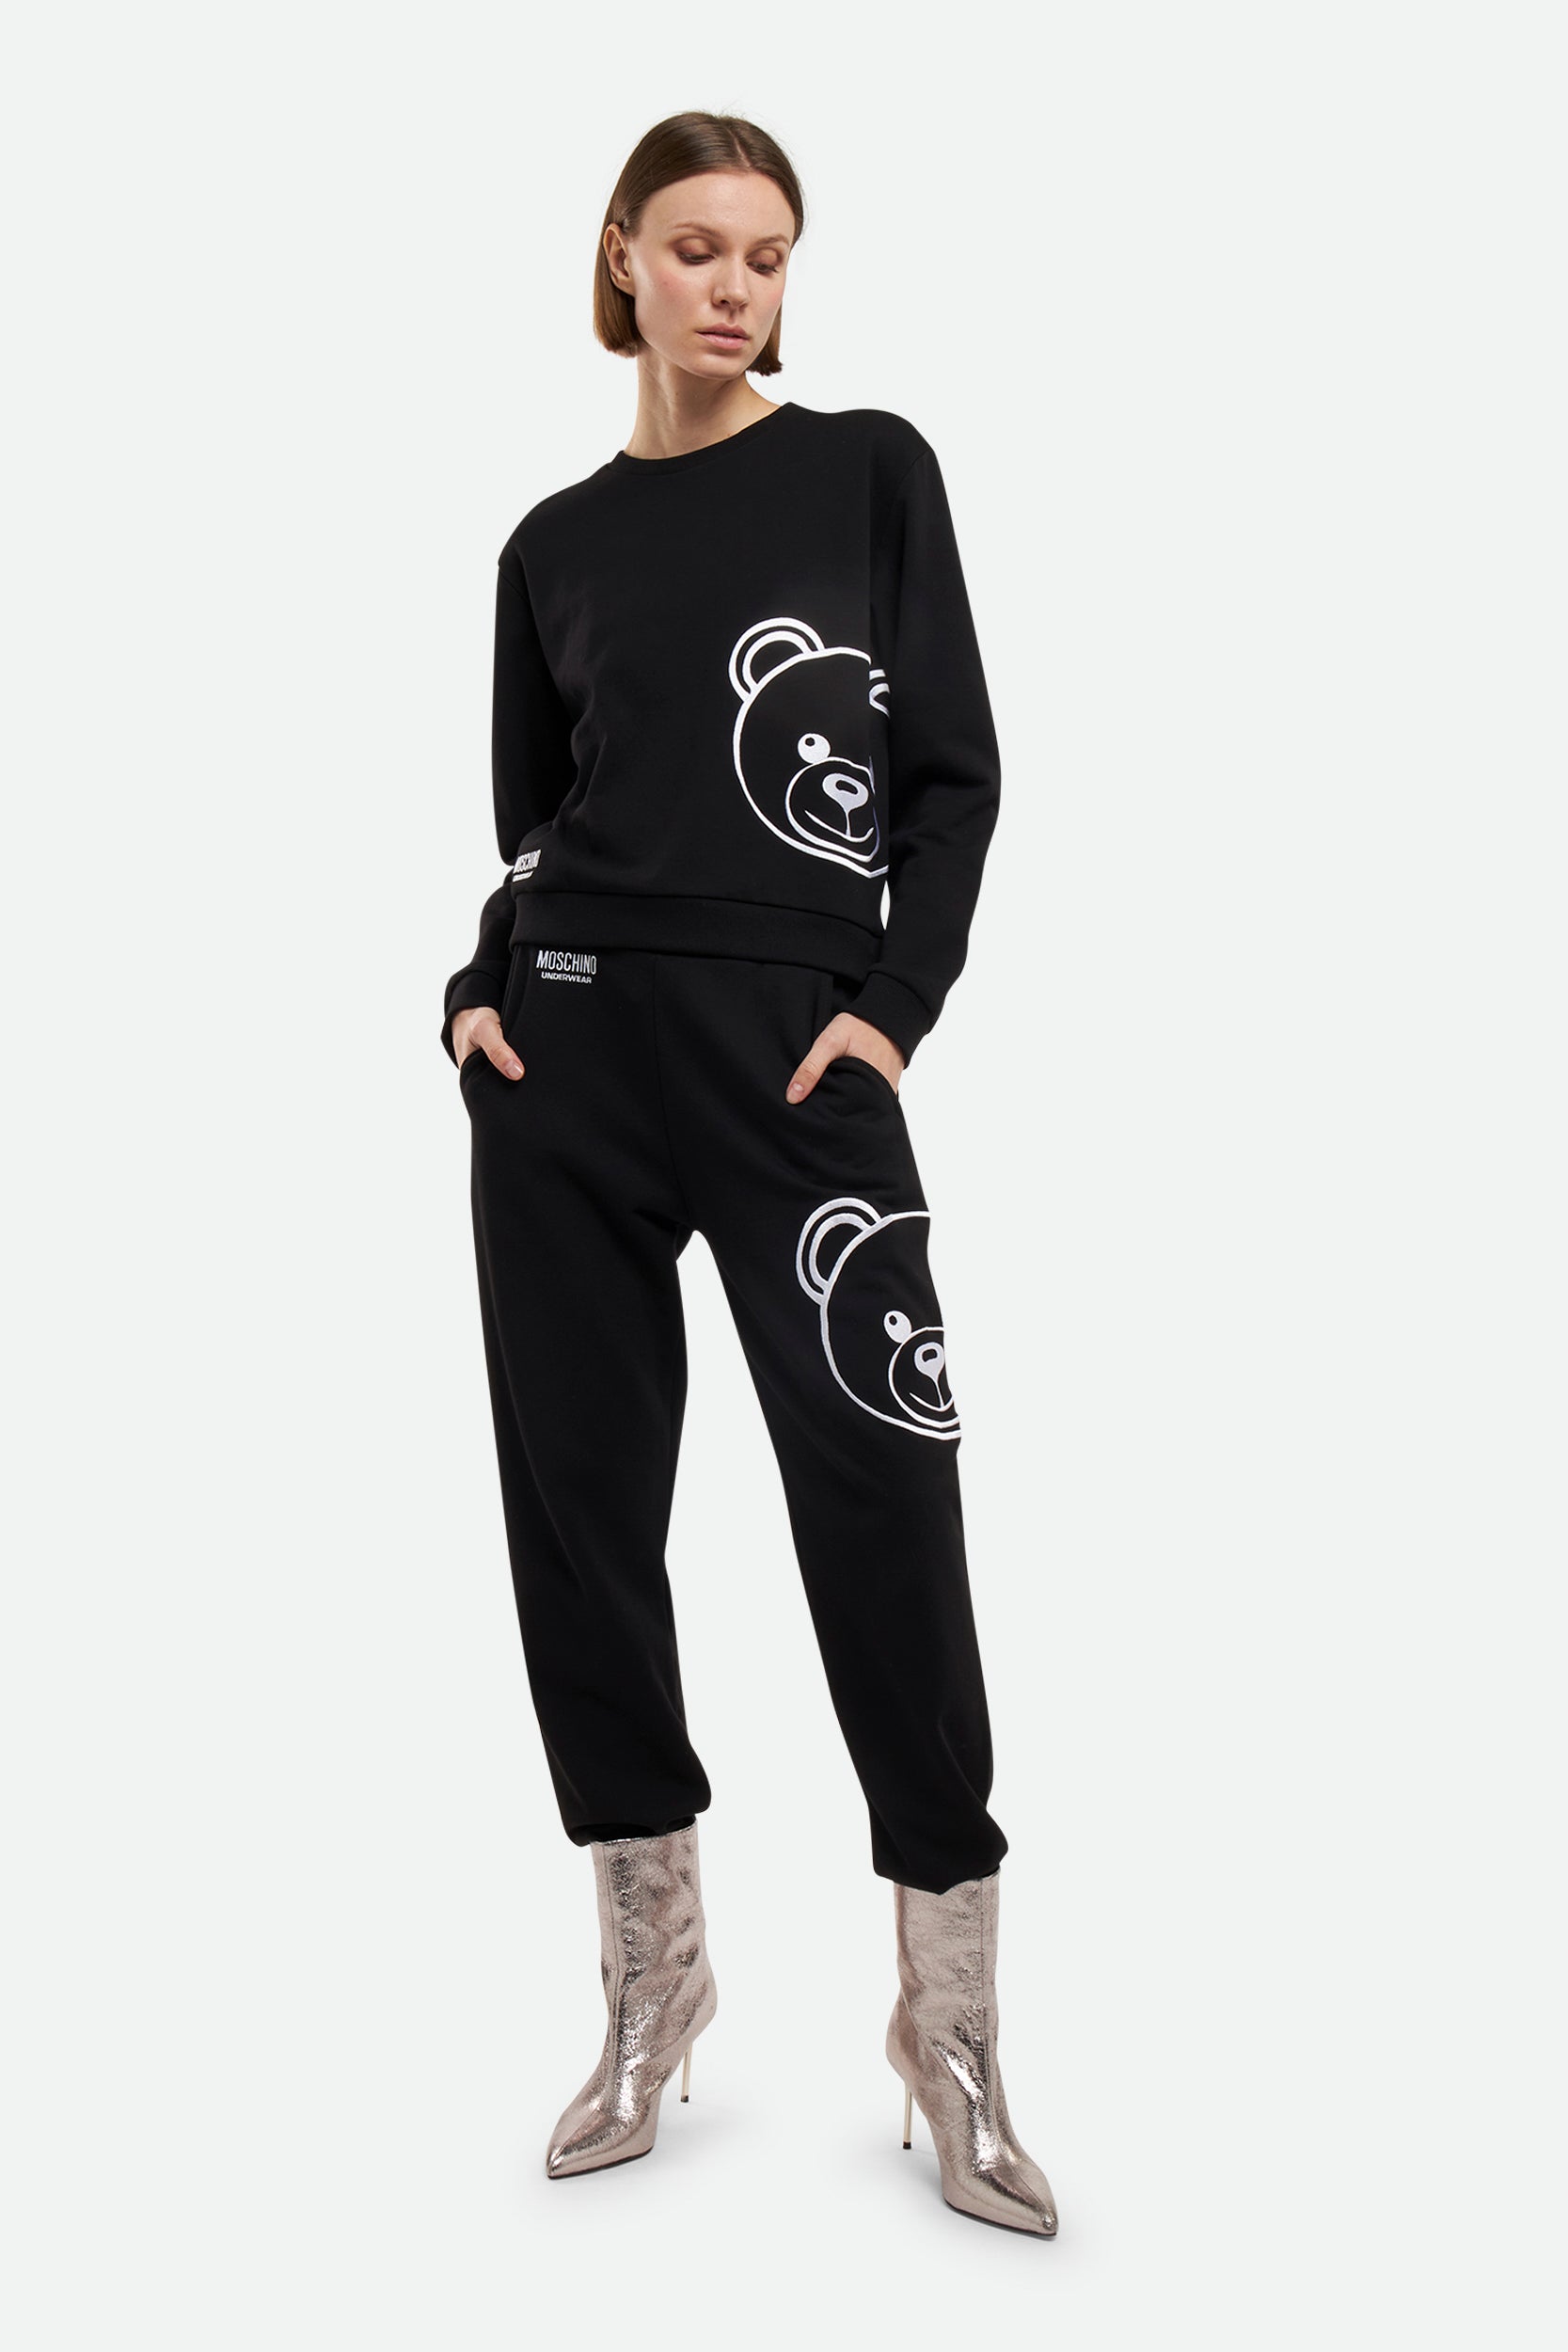 Schwarzes Moschino-Sweatshirt